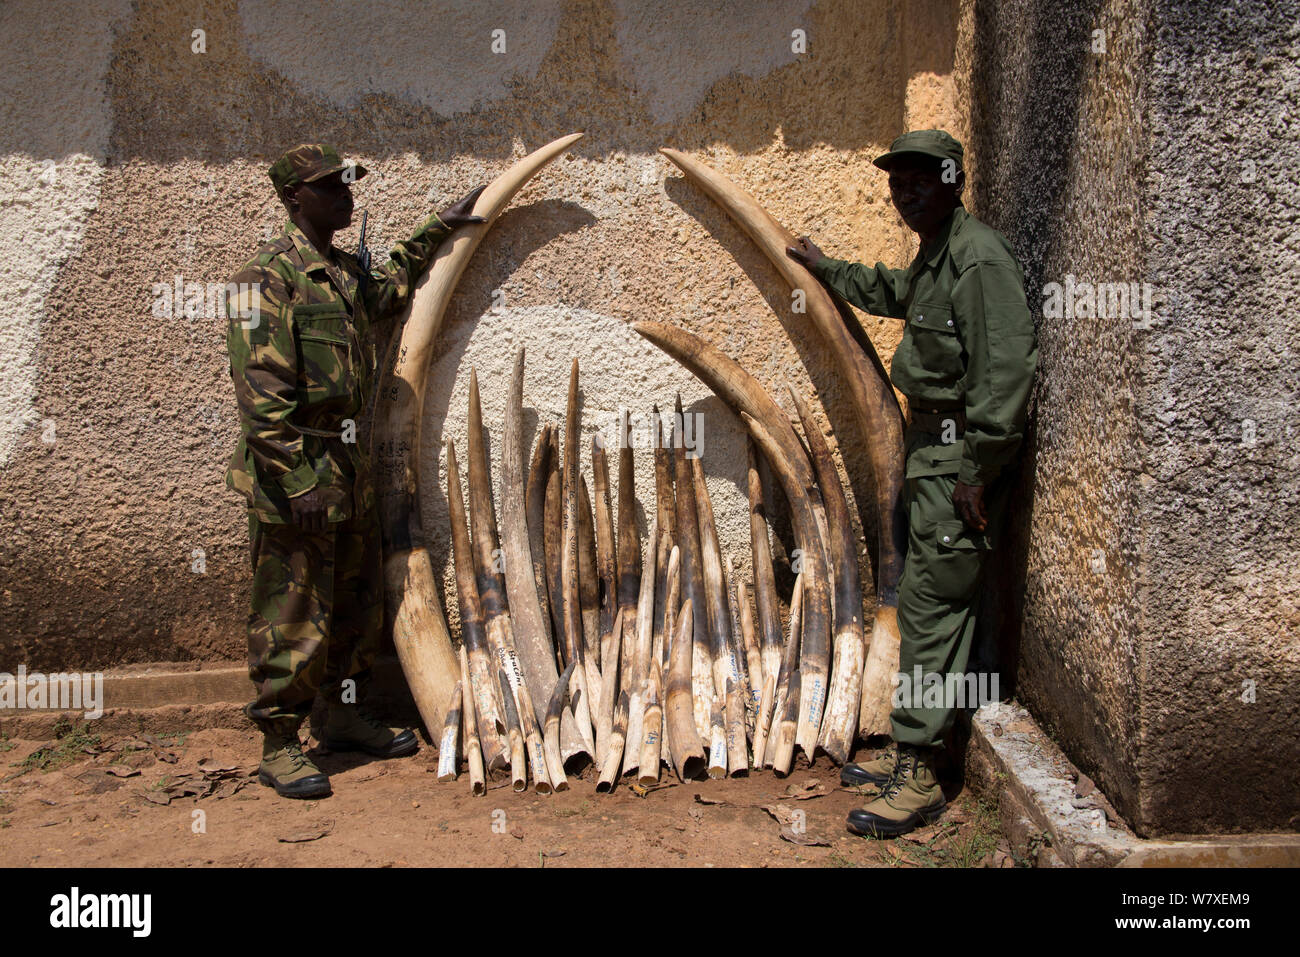 Park Rangers Holding beschlagnahmt Waldelefant Hauer tusks (Loxodonta cyclotis), Garamba National Park in der Demokratischen Republik Kongo. Stockfoto